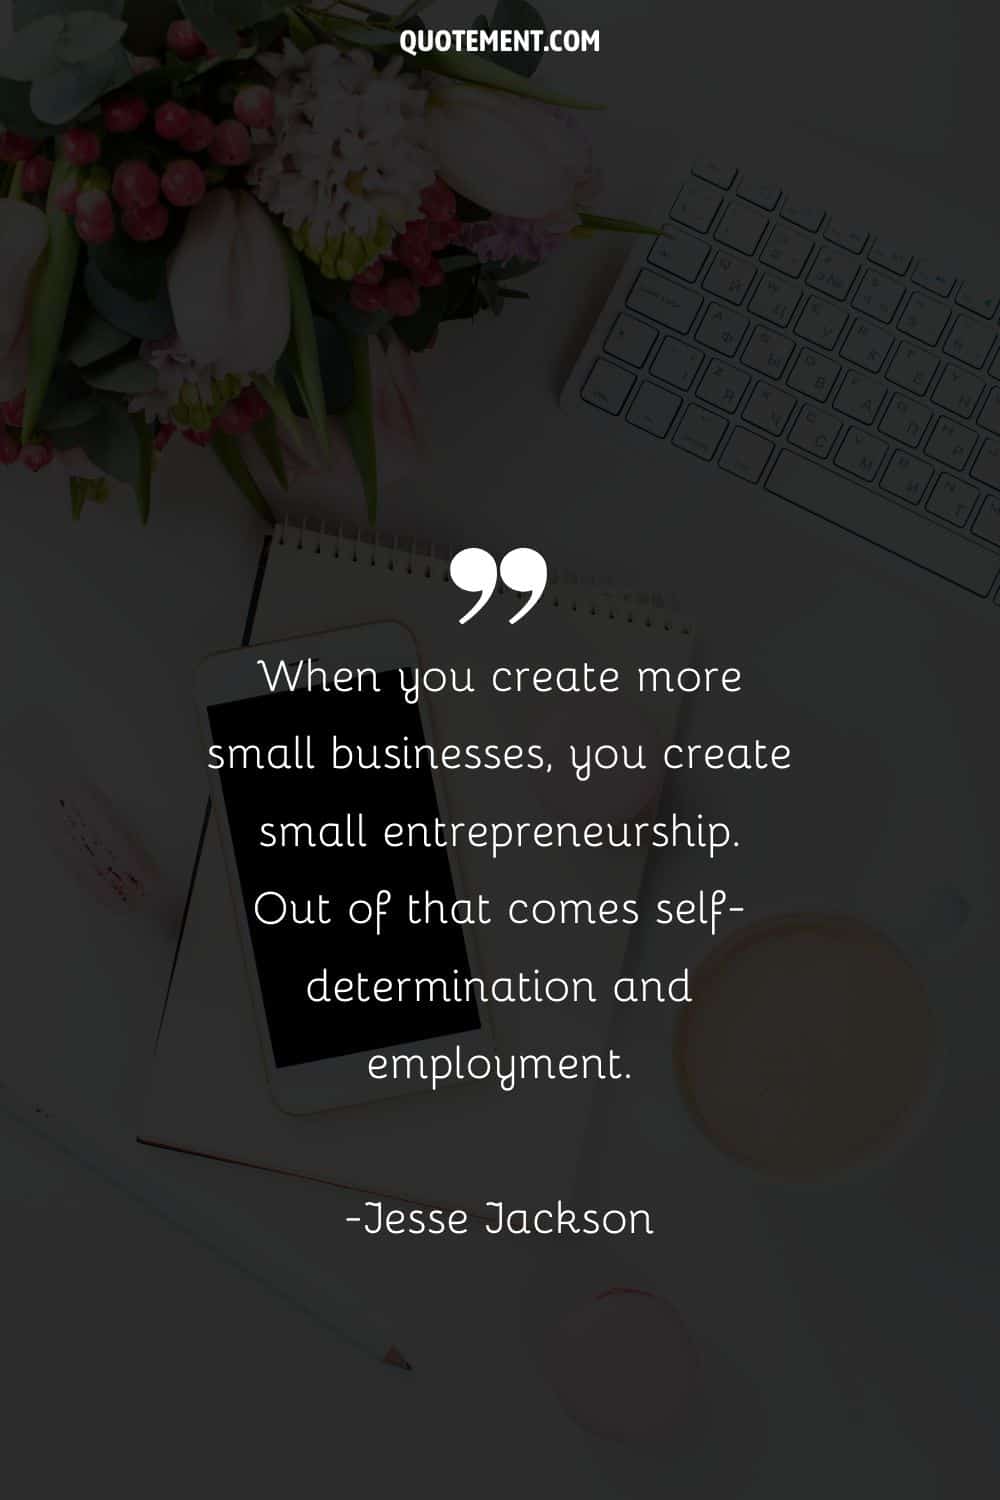 When you create more small businesses, you create small entrepreneurship